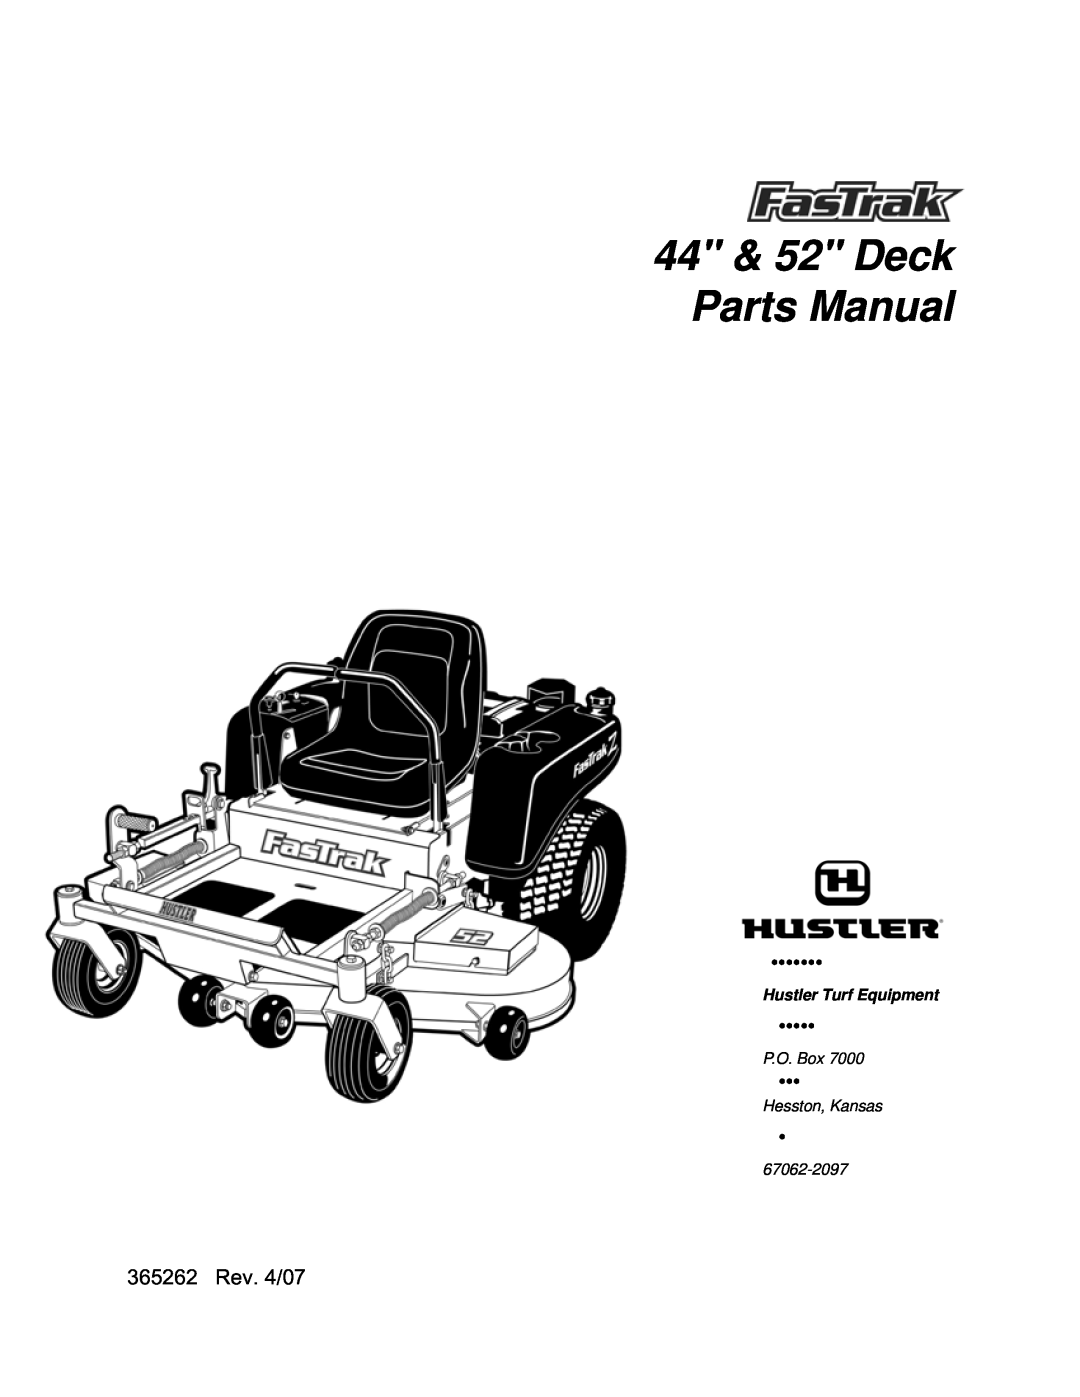 Hustler Turf Lawn Mower manual 365262 Rev. 4/07, 44 & 52 Deck Parts Manual, Hustler Turf Equipment, P.O. Box, 67062-2097 